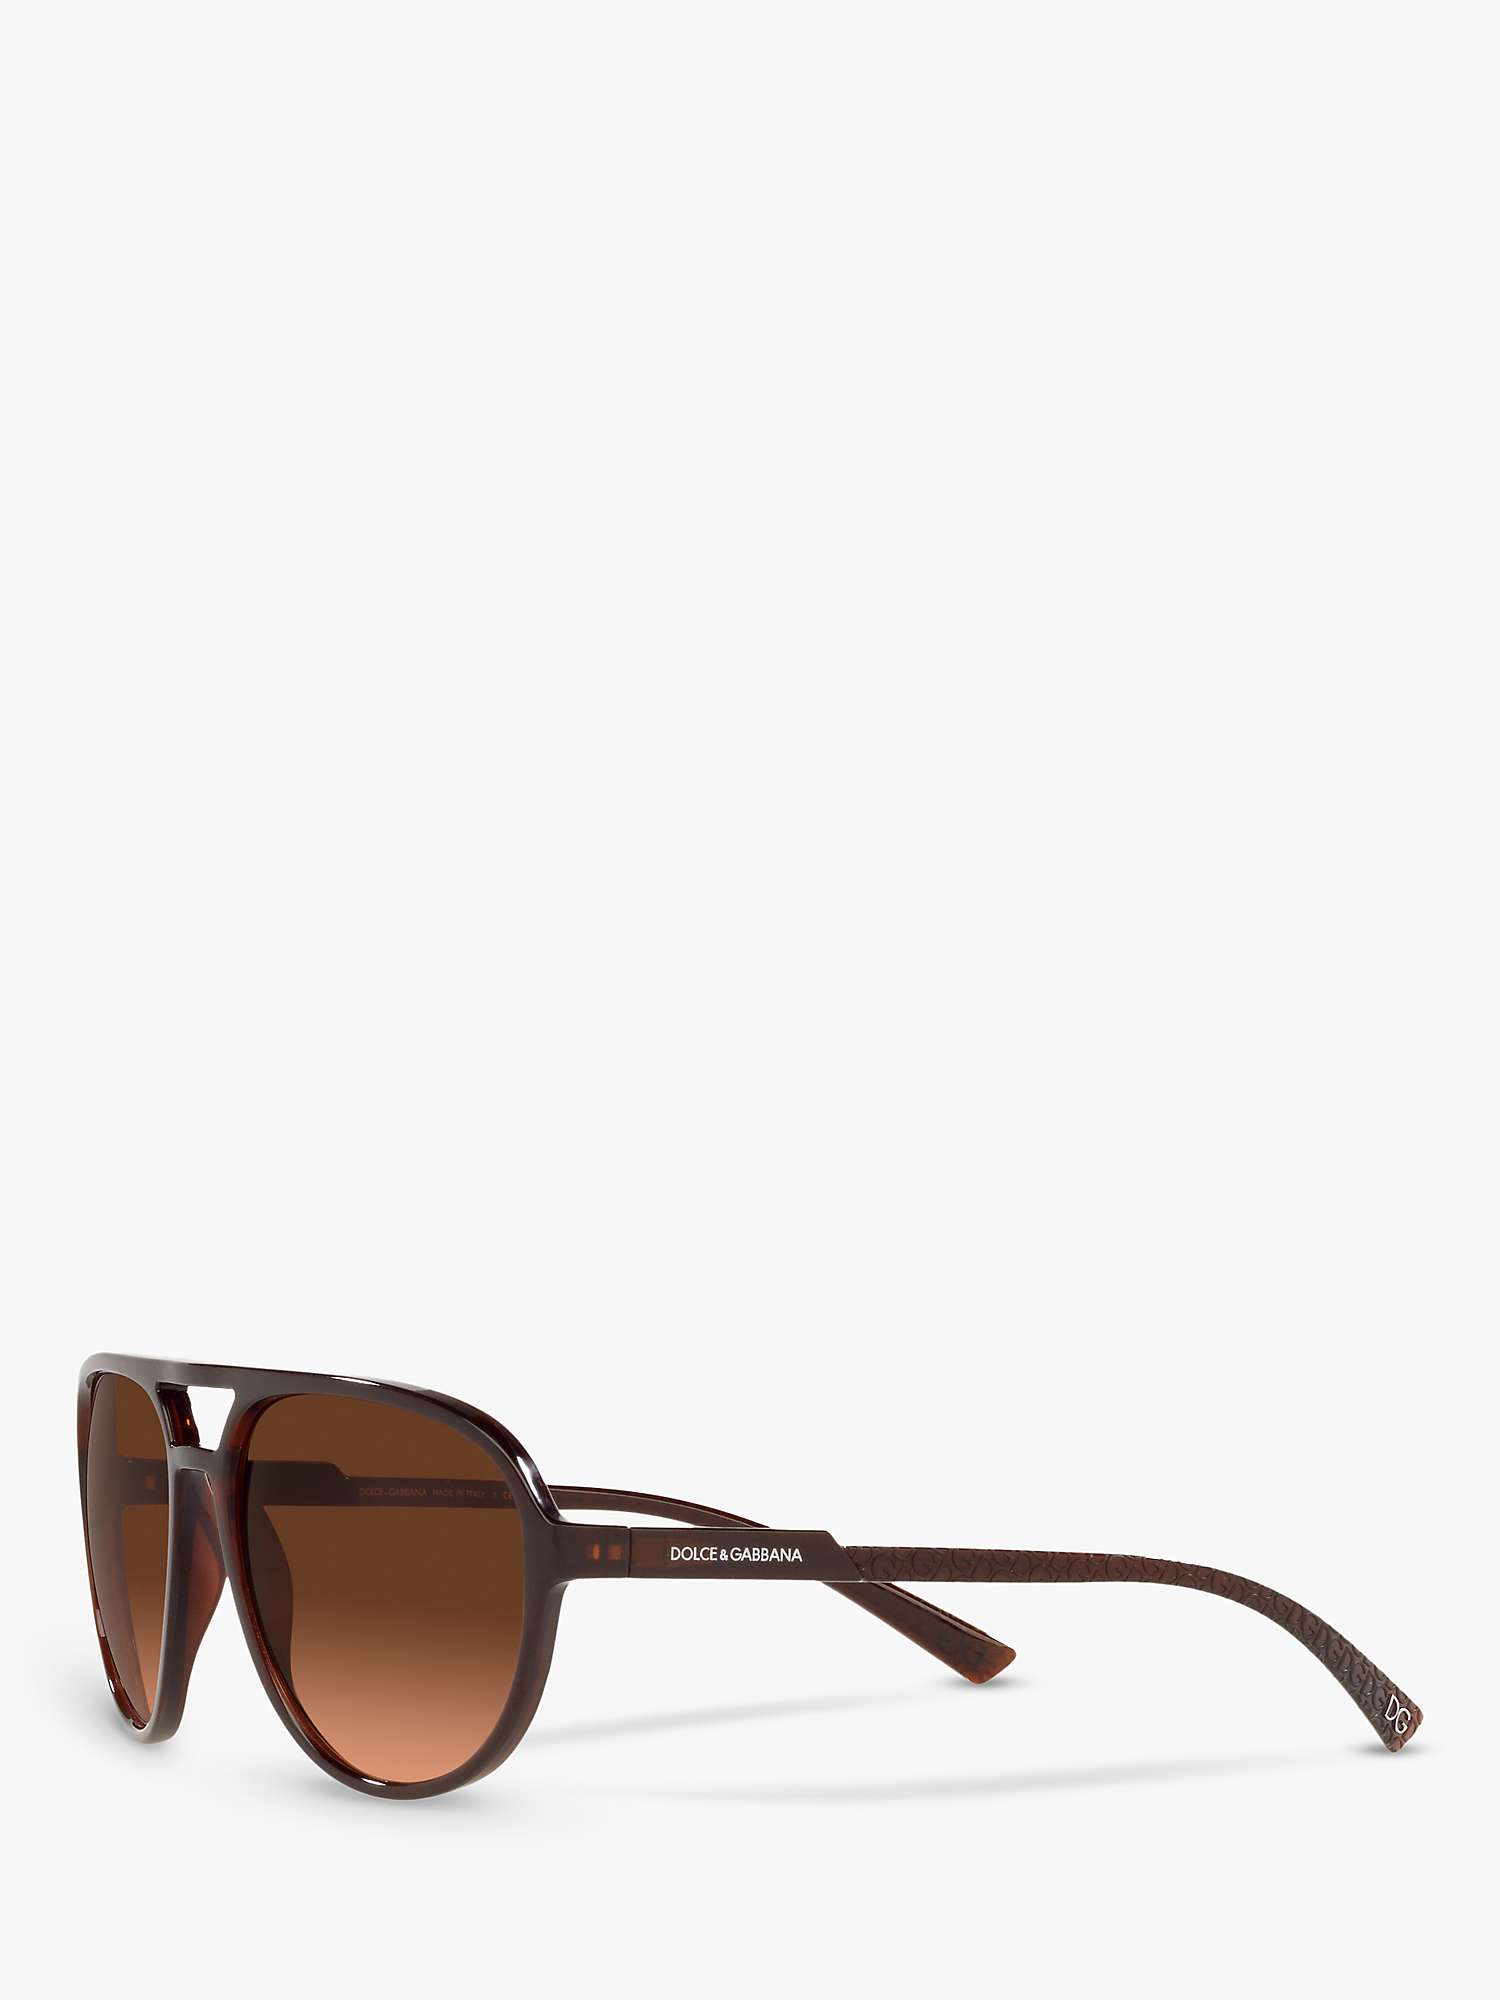 Buy Dolce & Gabbana DG6150 Men's Aviator Sunglasses, Matte Brown/Brown Gradient Online at johnlewis.com